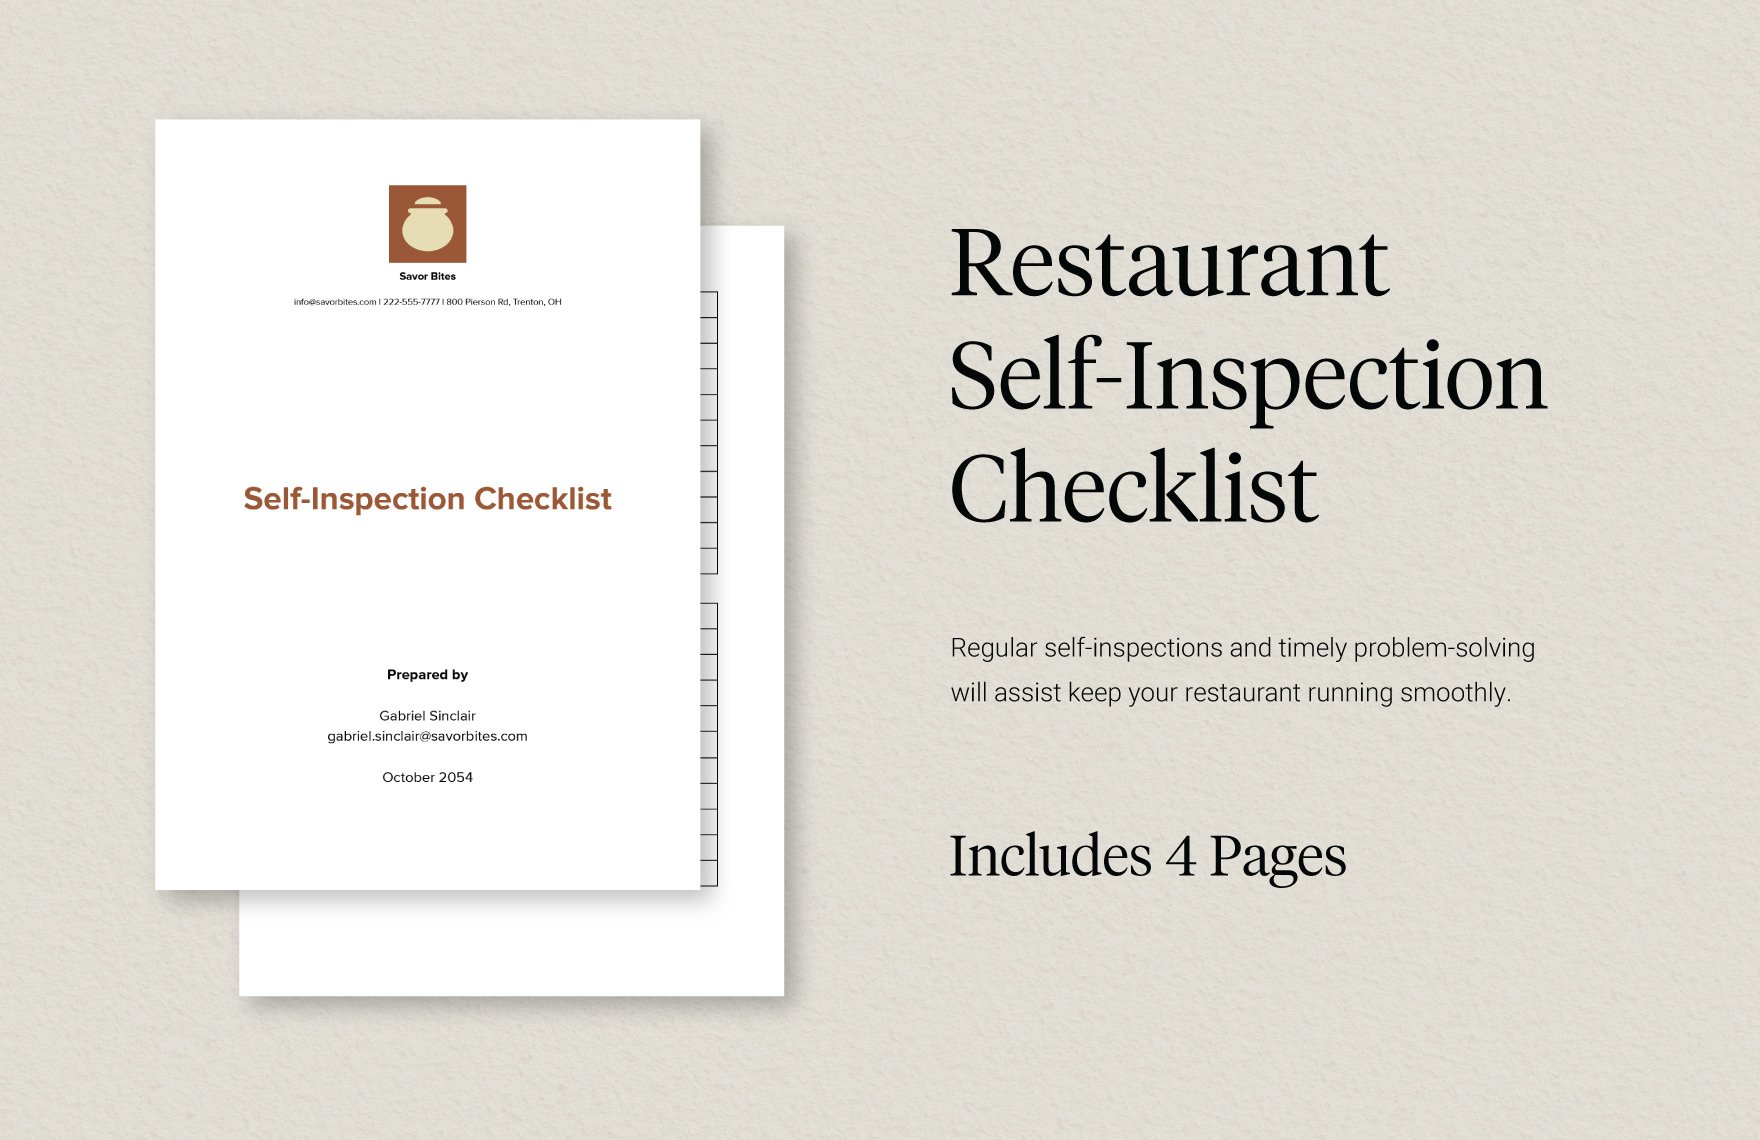 Restaurant Self-Inspection Checklist